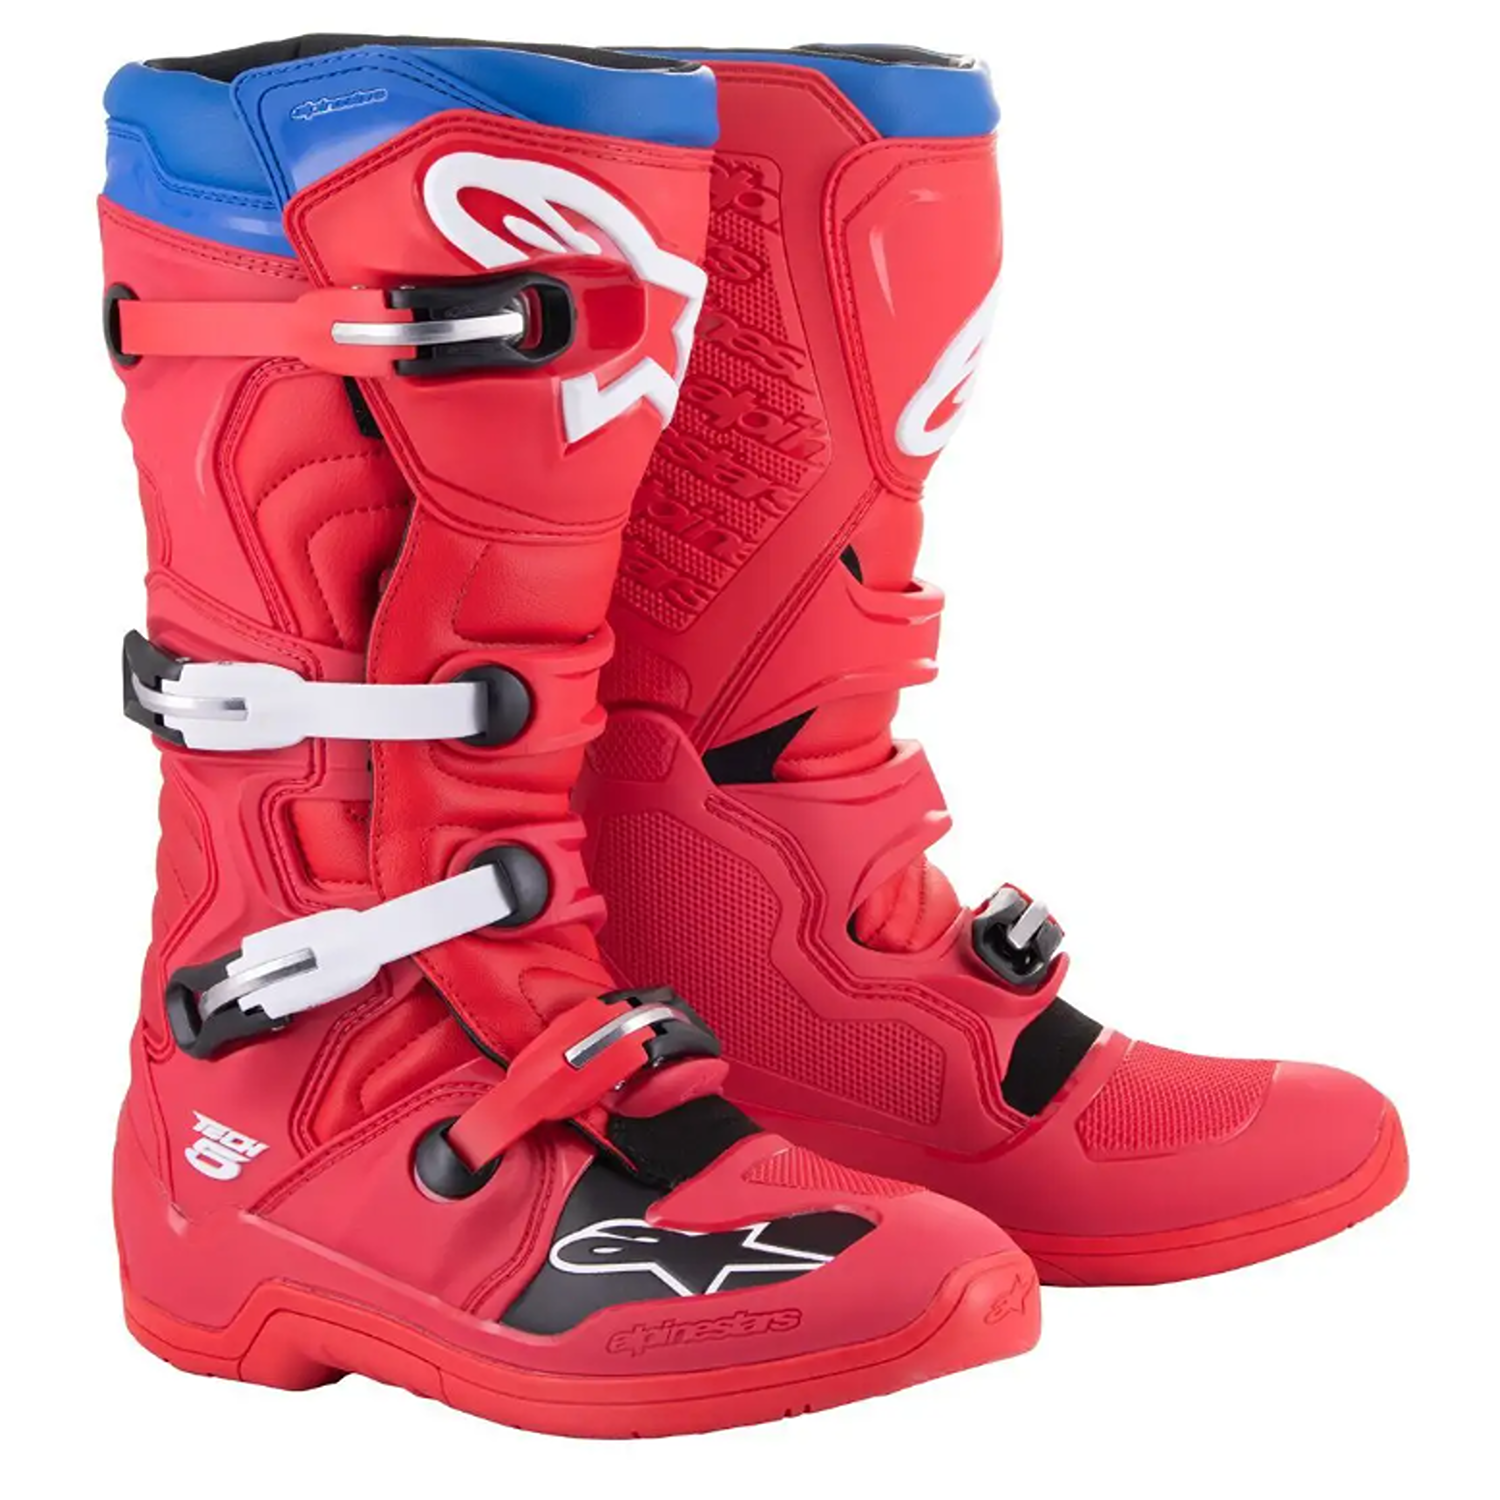 Image of Alpinestars Tech 5 Boots Bright Red Dark Red Blue Size US 15 EN